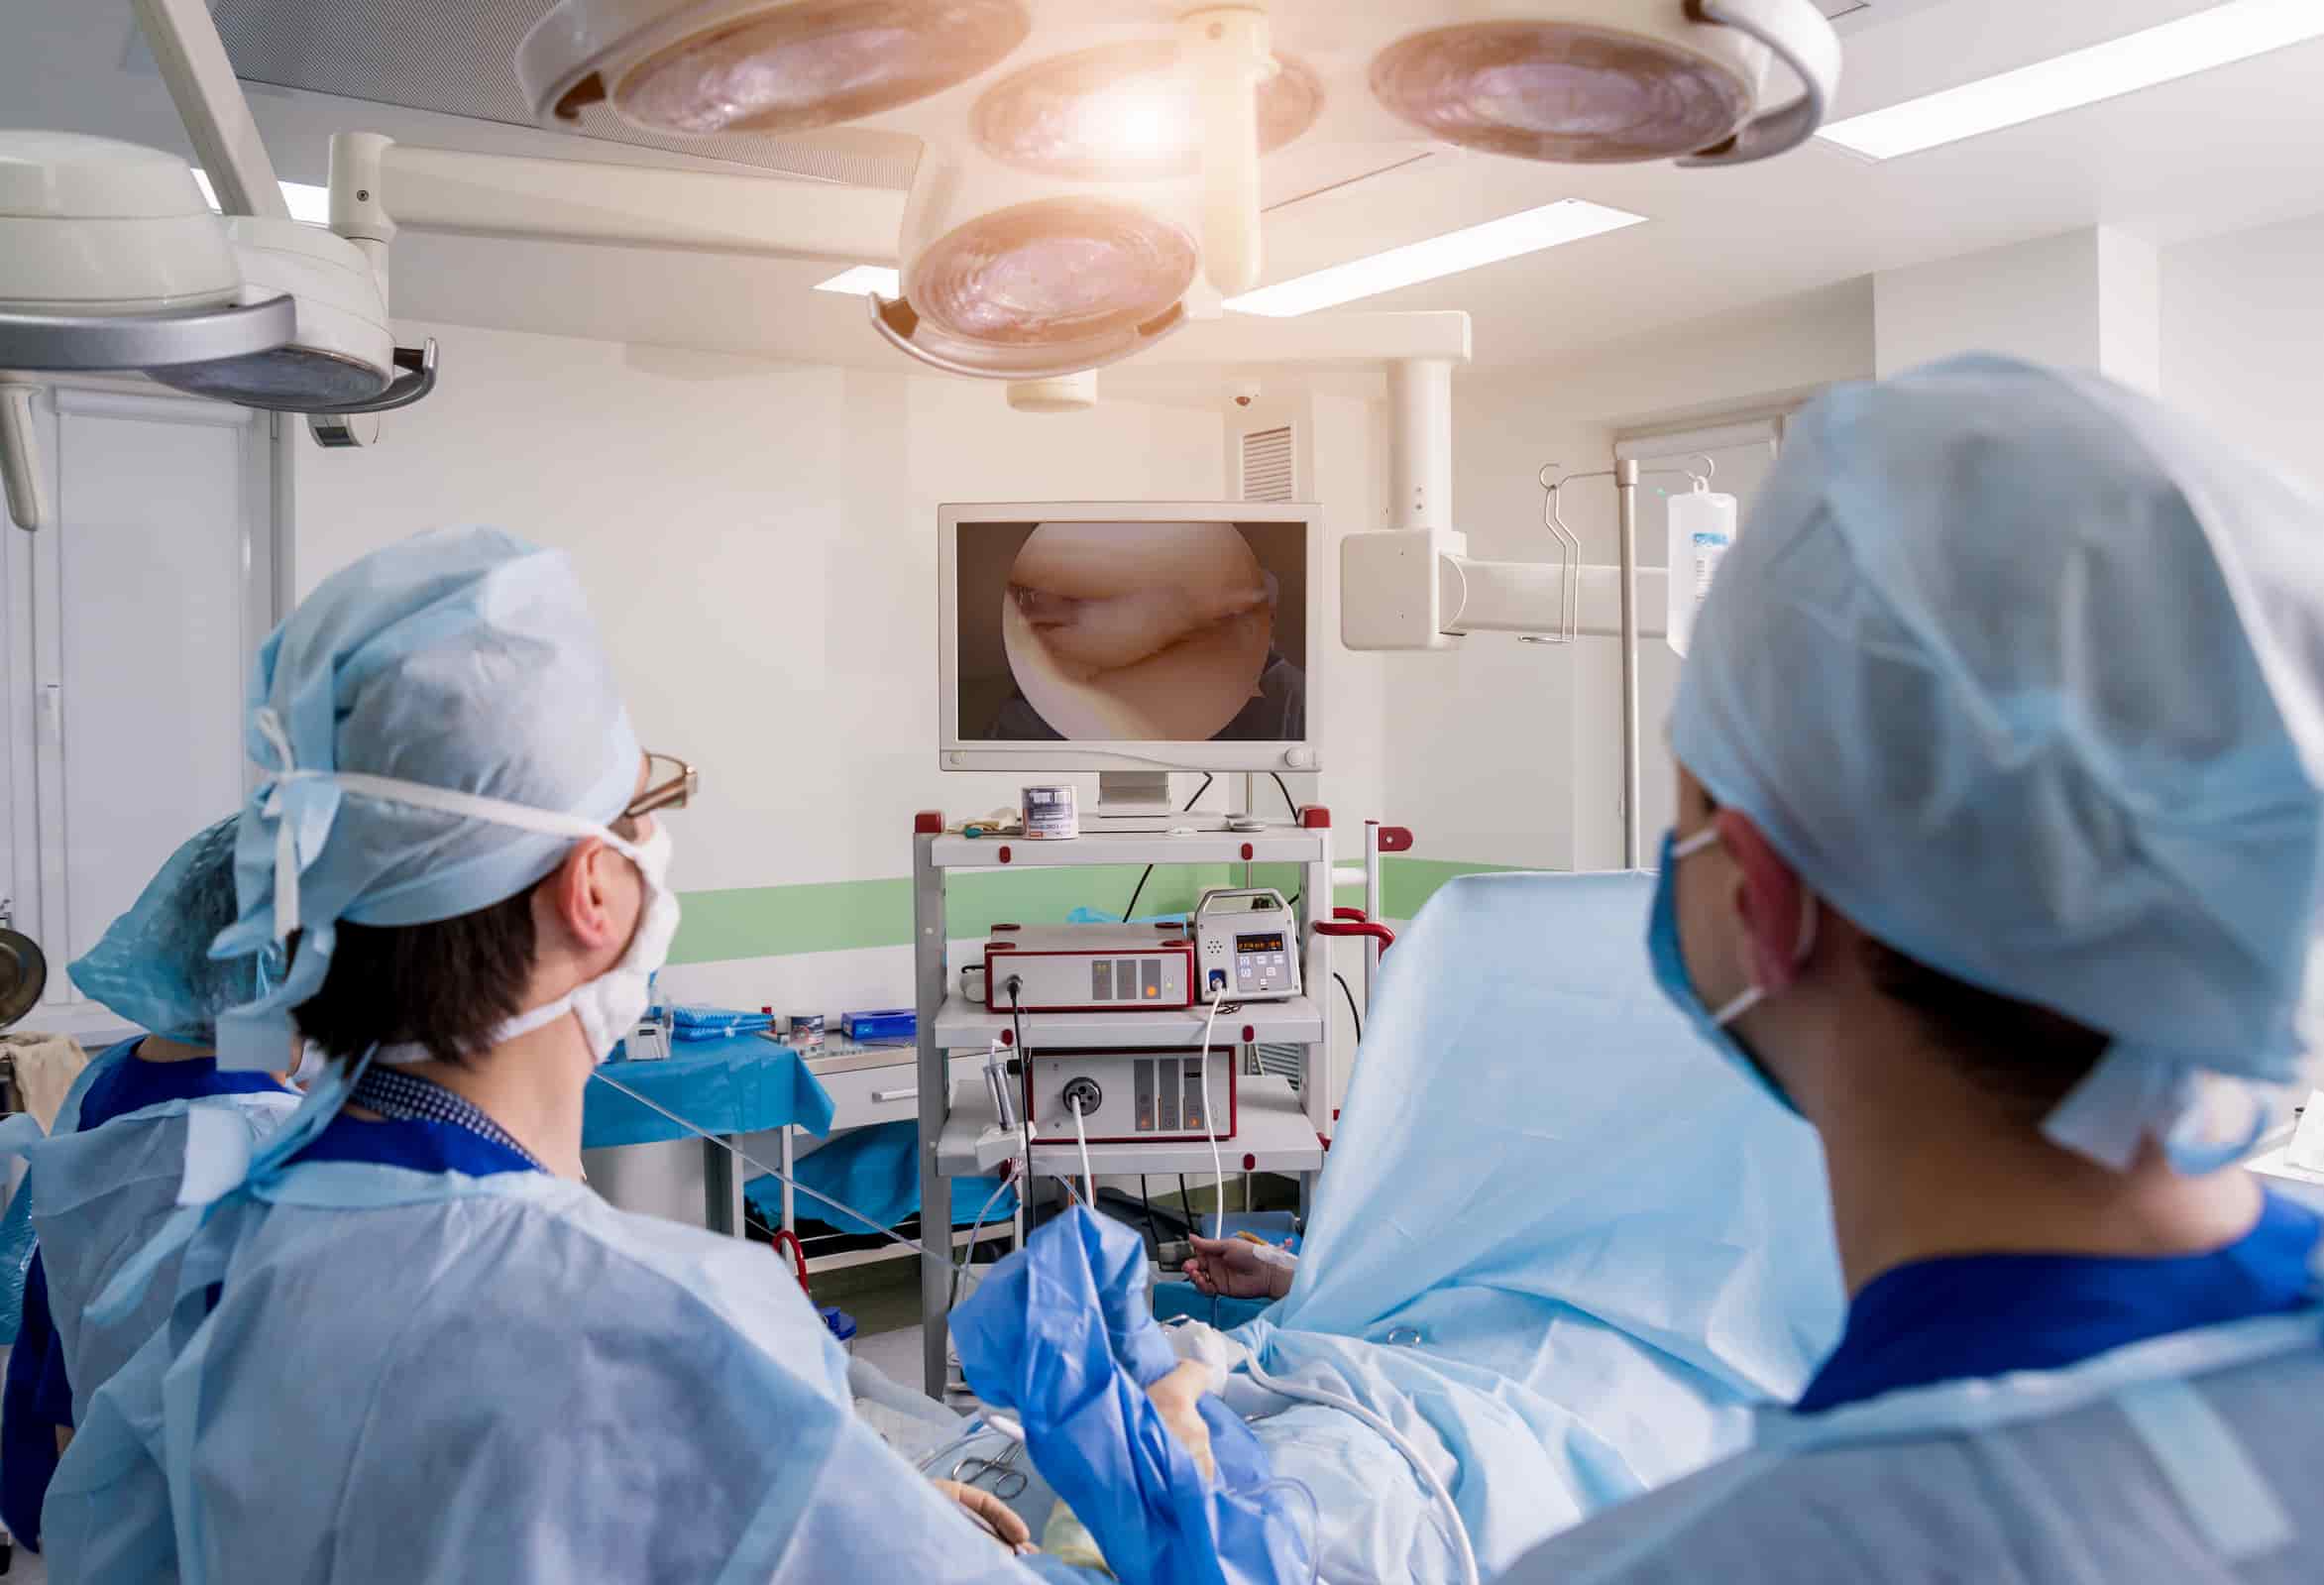 Turkiye meniscectomy surgery procedure